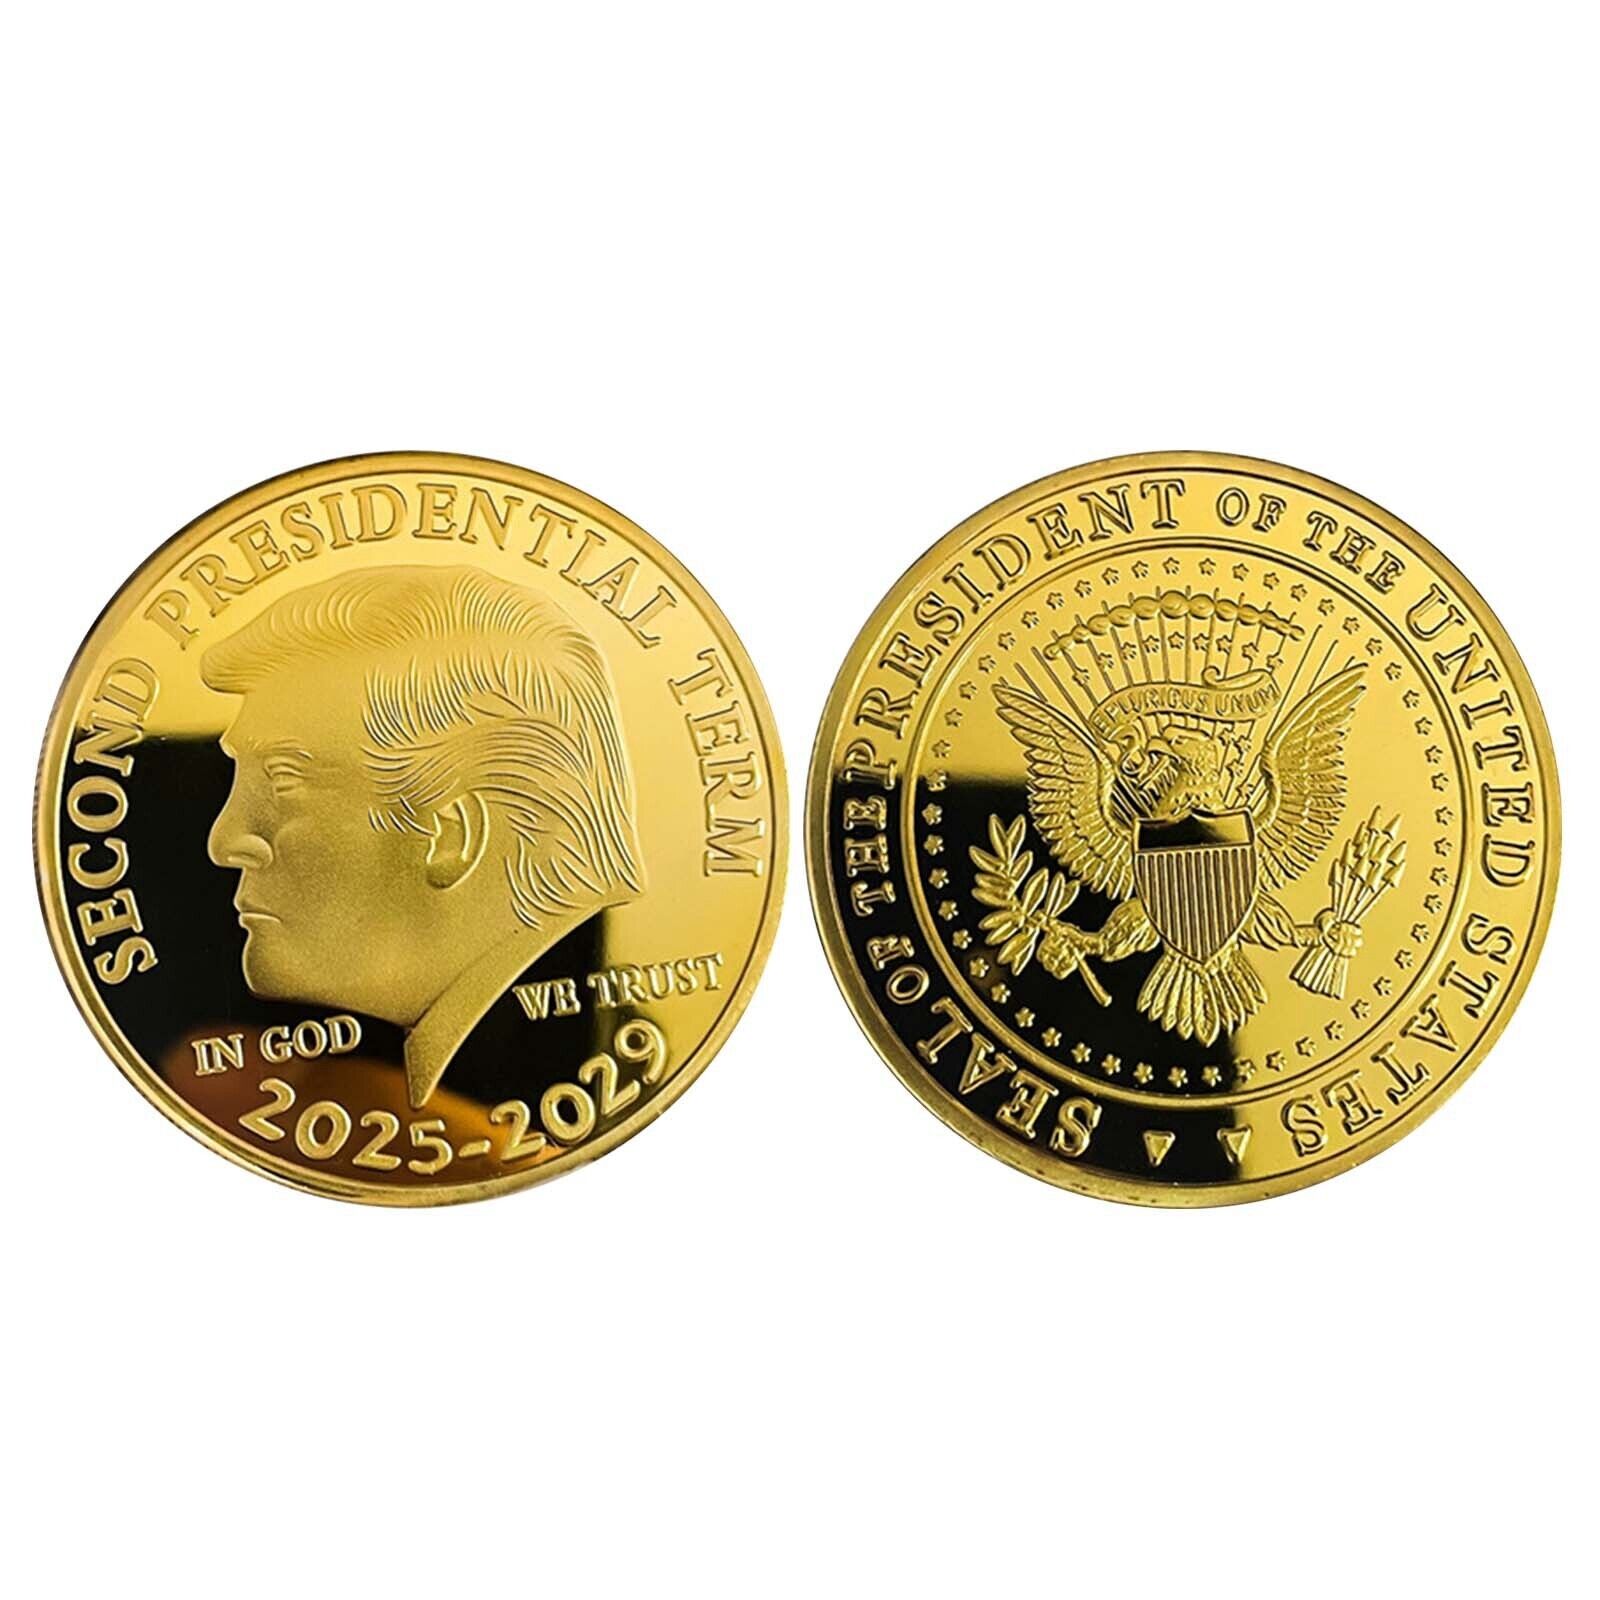 2025-2029 President Donald Trump Commemorative Coin Take America Back Metal Coin